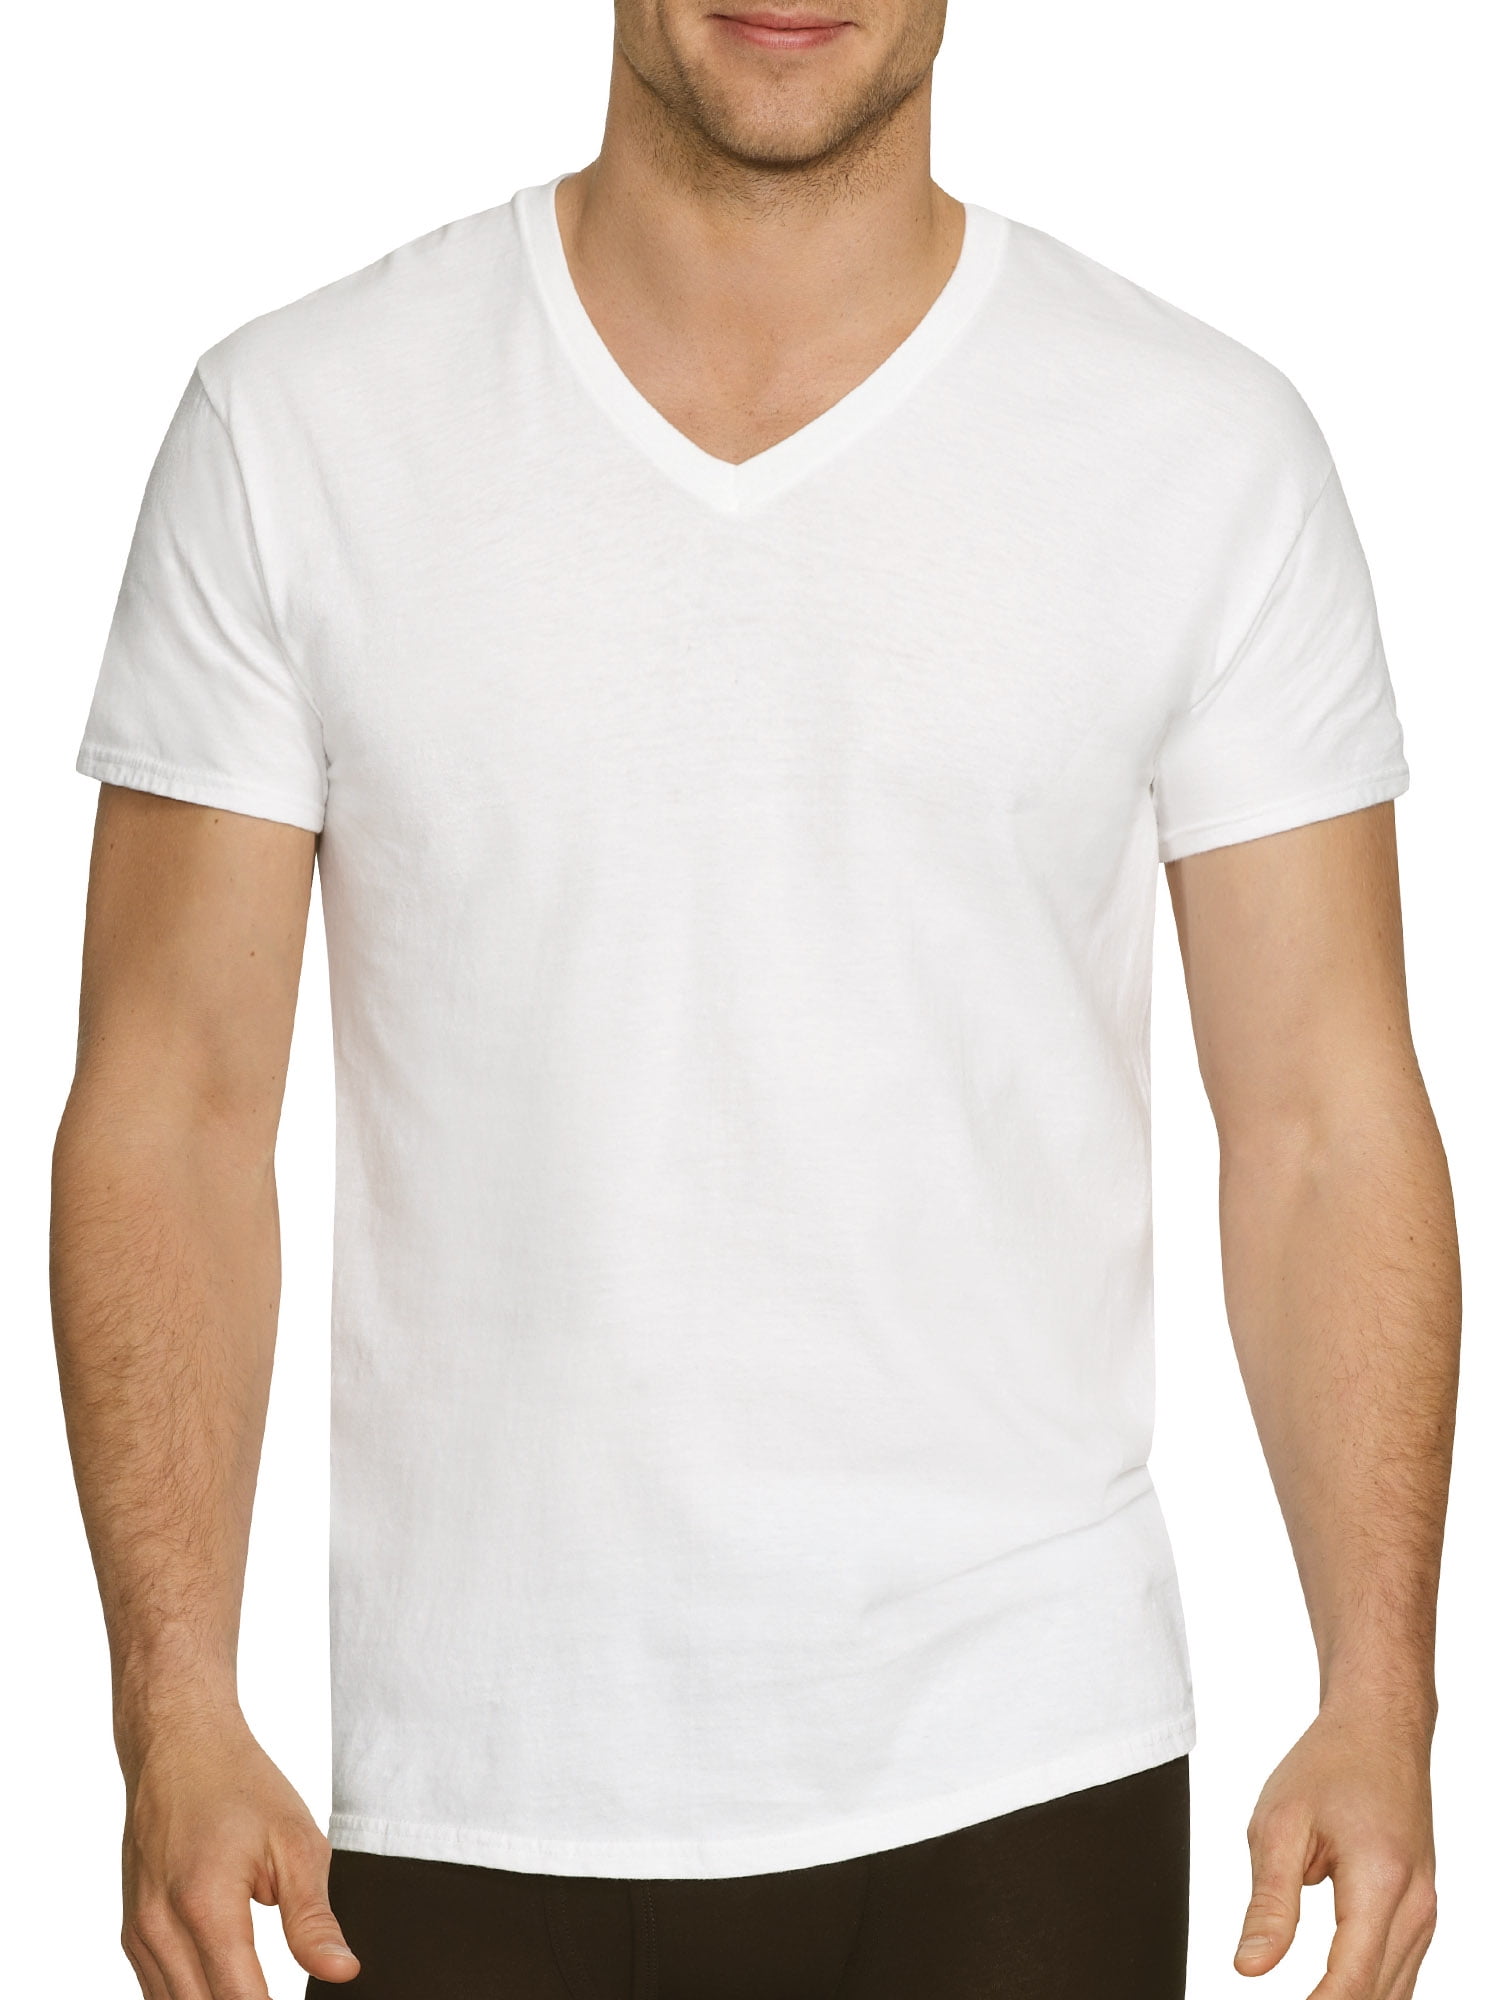 Hanes - Hanes Men's Comfort Fit Ultra Soft Cotton White V-Neck ...